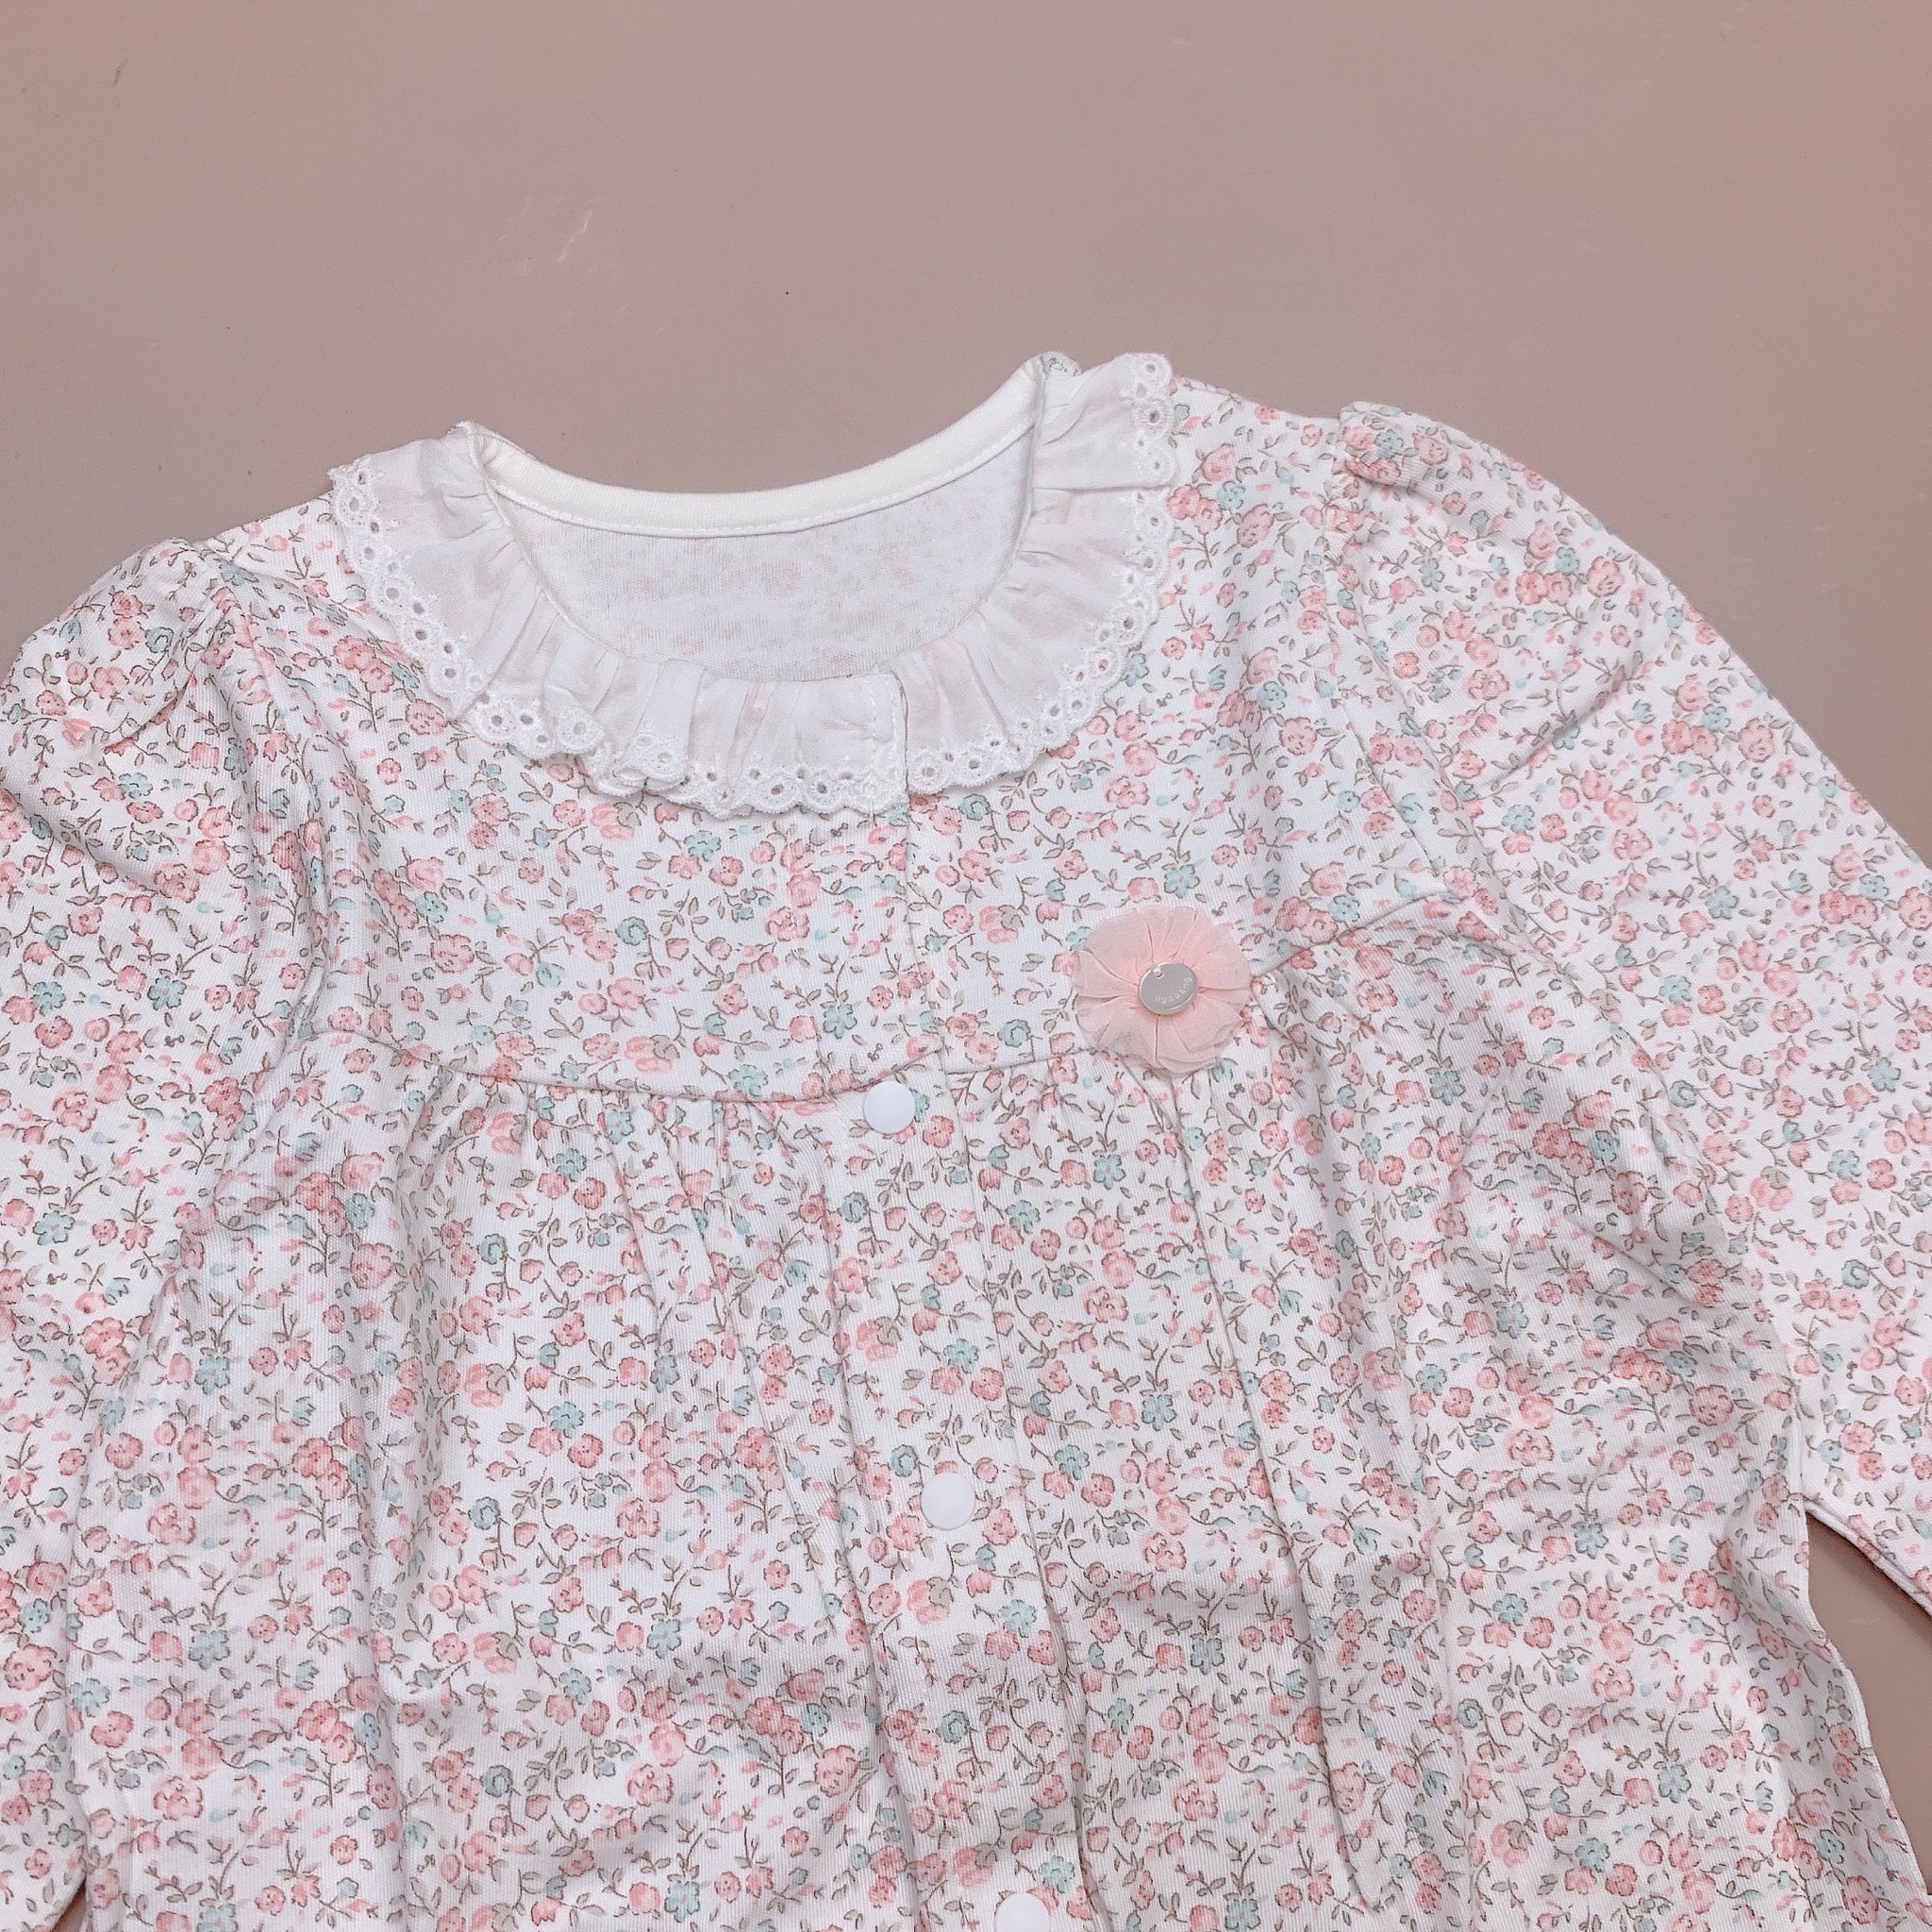 Body cotton Agabang hoa nhí hồng xanh size 80